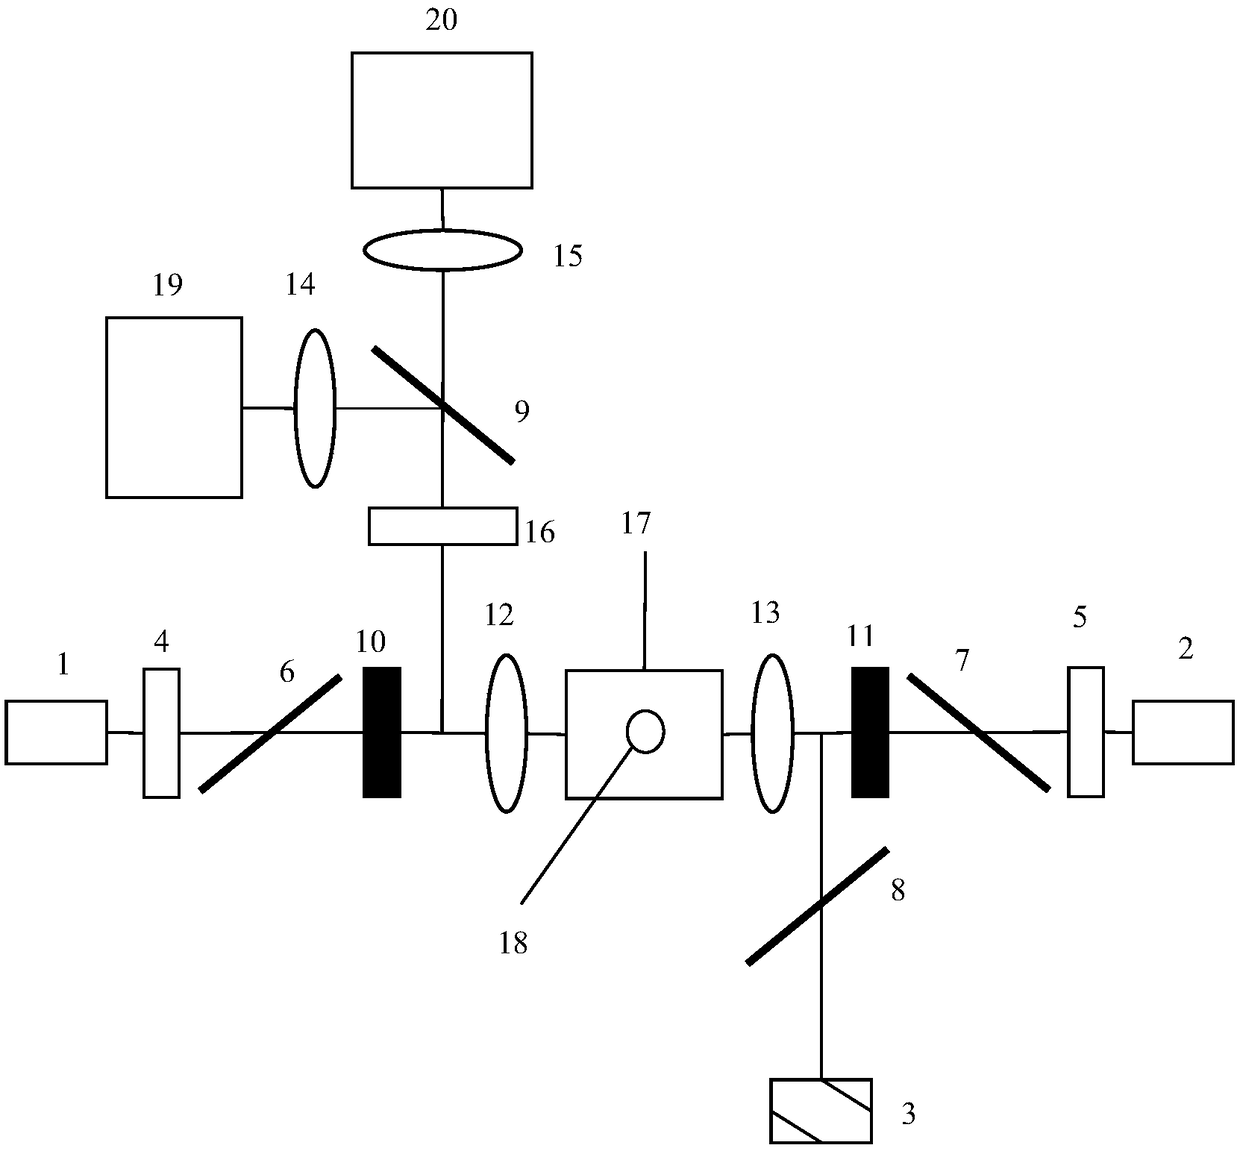 Photonic suspension gyroscope based on double-beam optical trap system